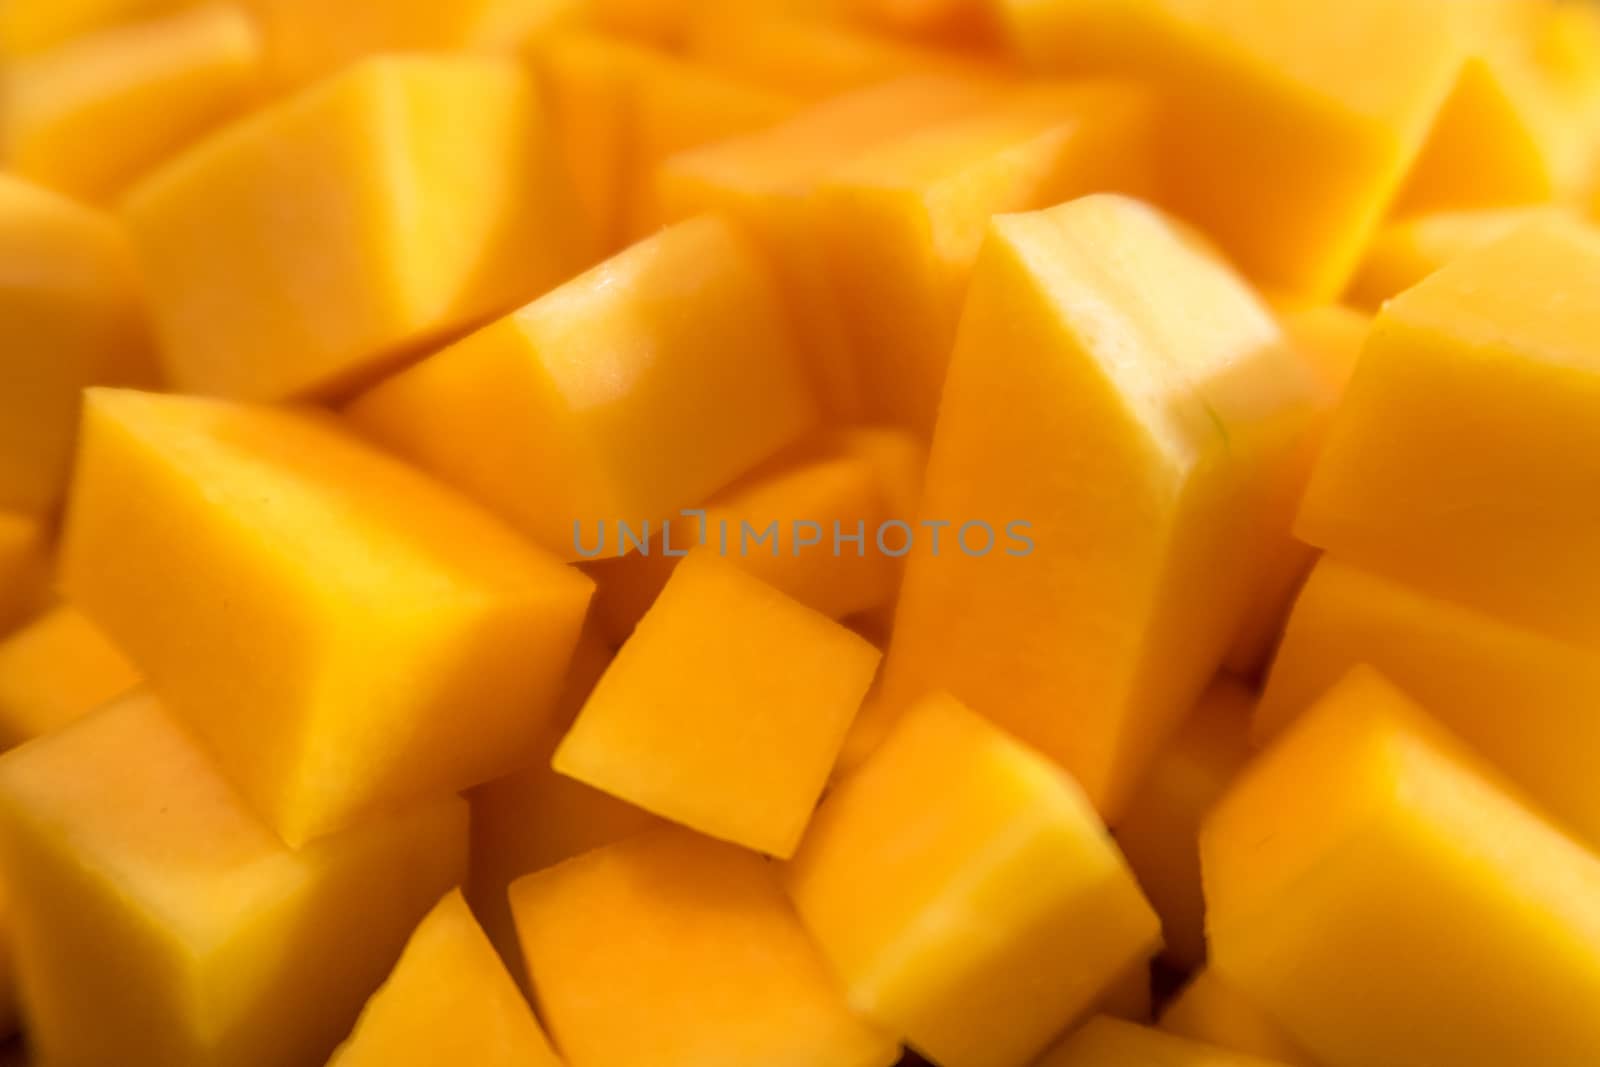 Butternut squash or mango by fpalaticky